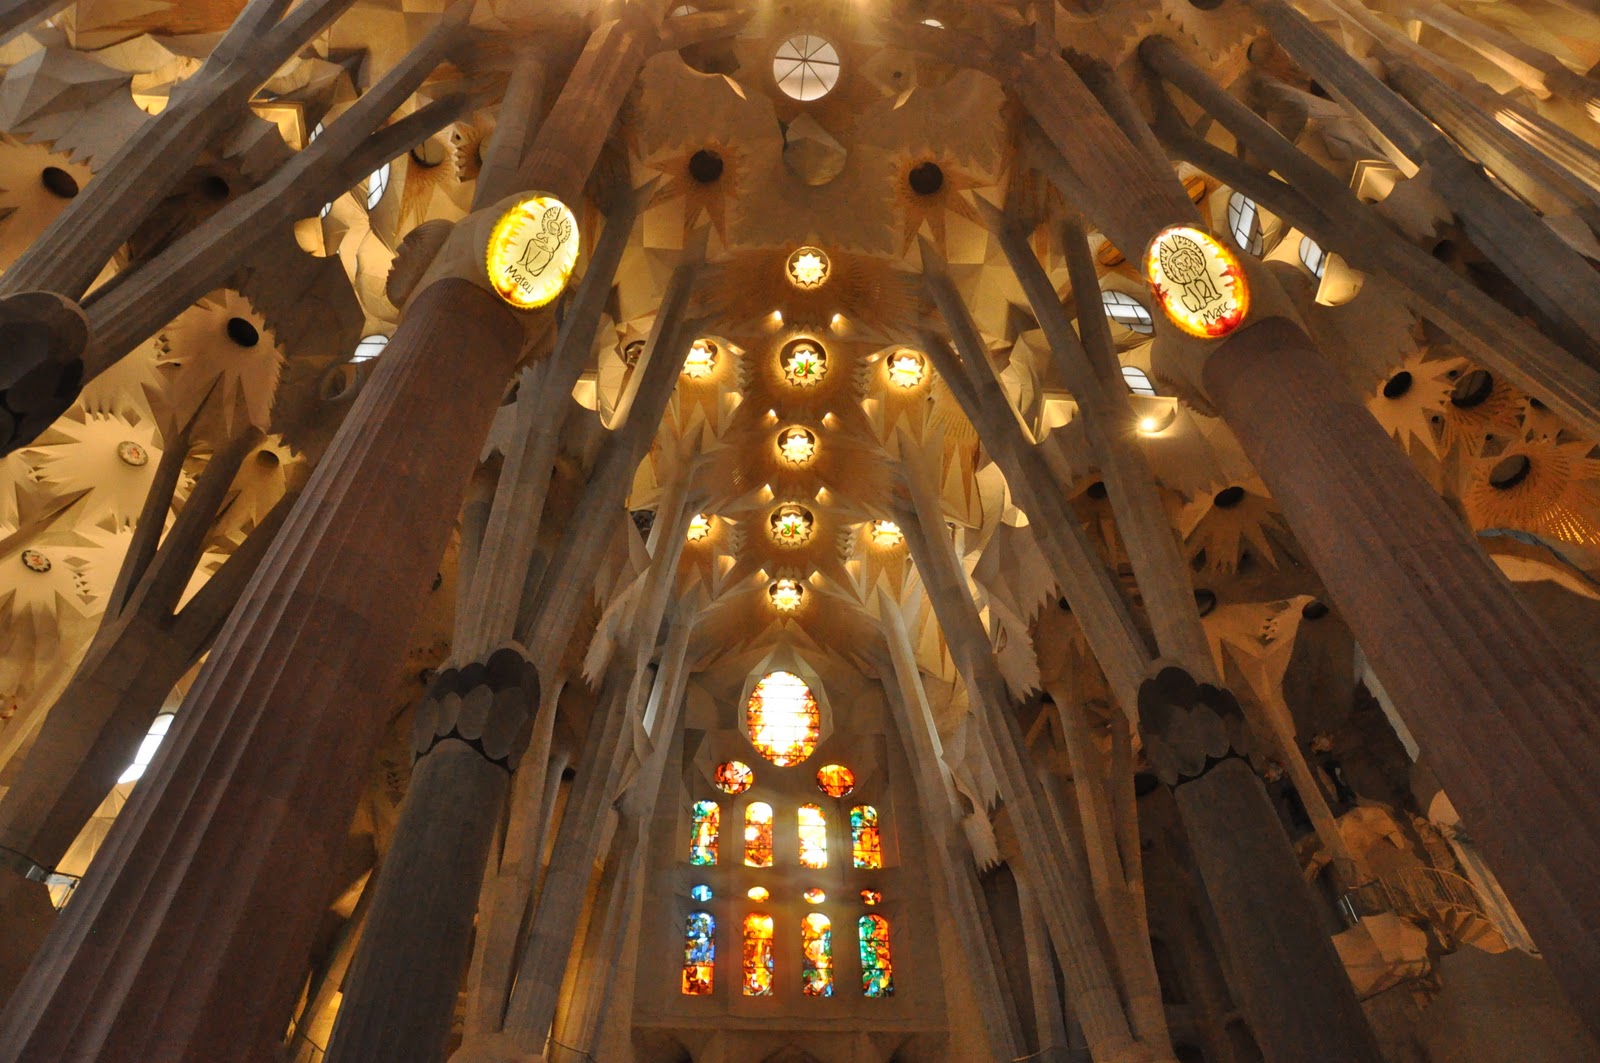 jcuphoto2011springdigital: La Sagrada Familia ... Worth the entrance fee!